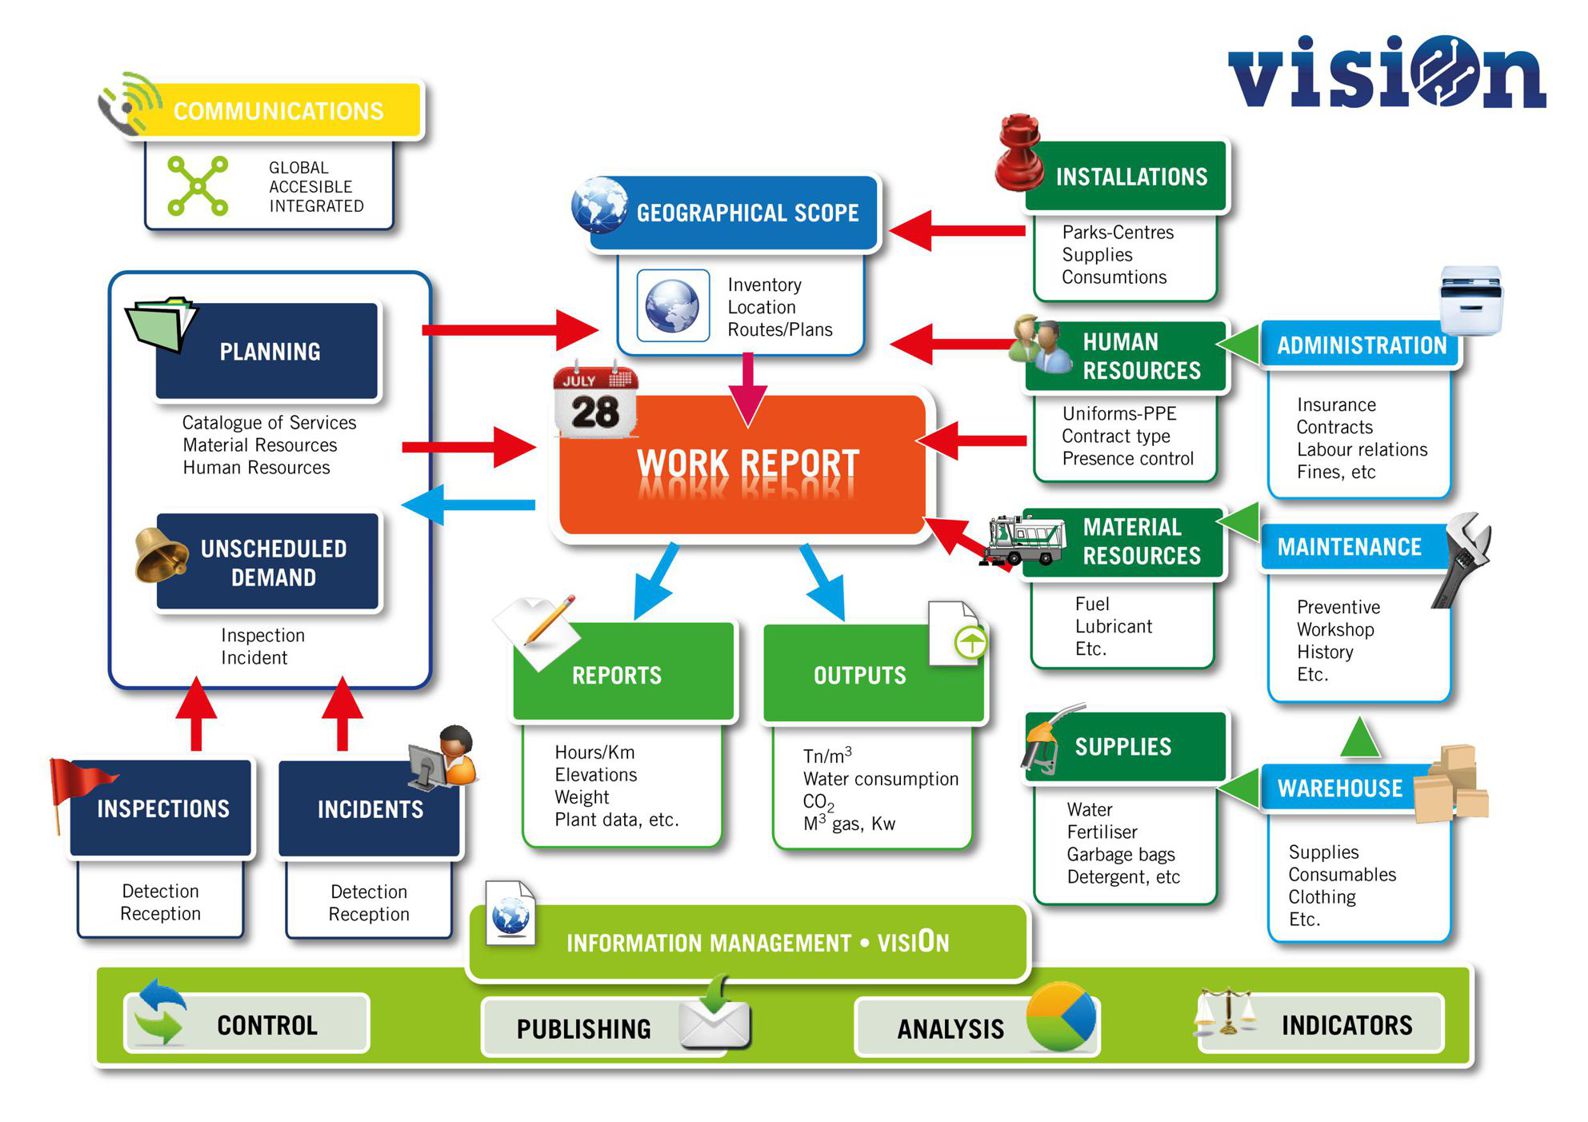 Outline of processes on the VISION platform